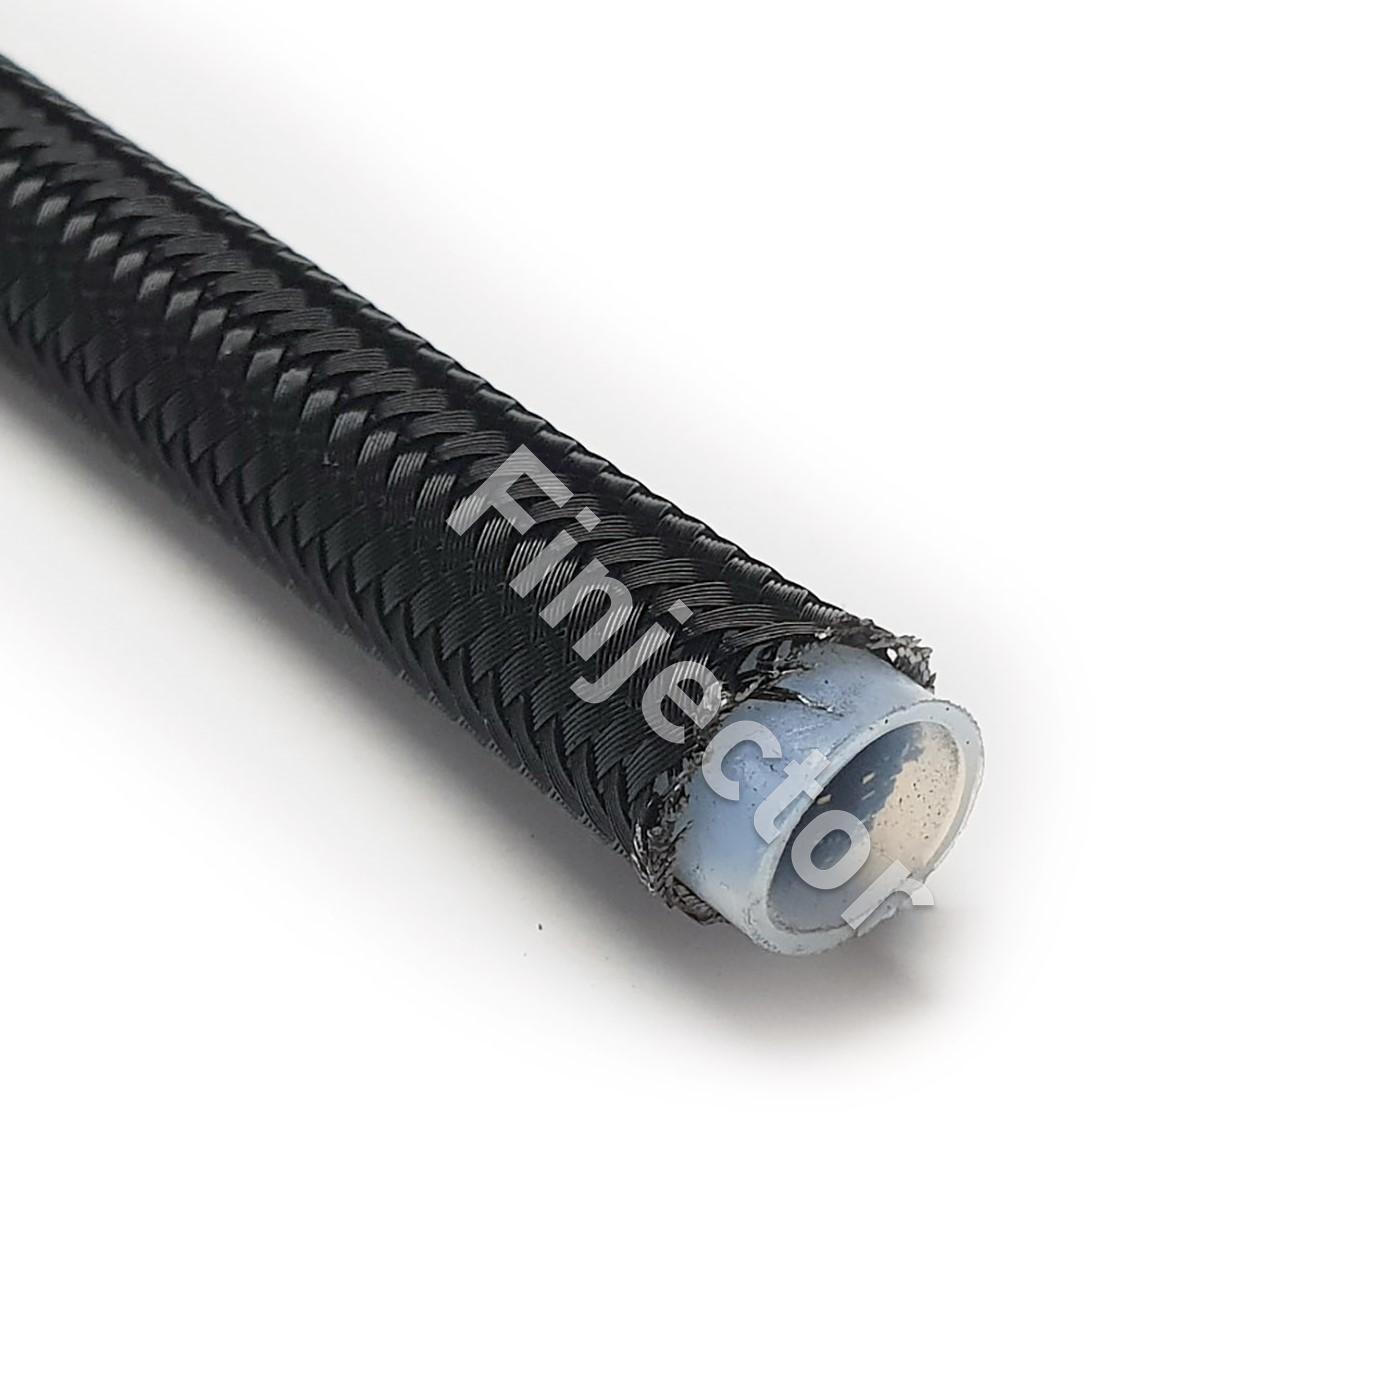 PTFE tubing and PTFE teflon ® hoses